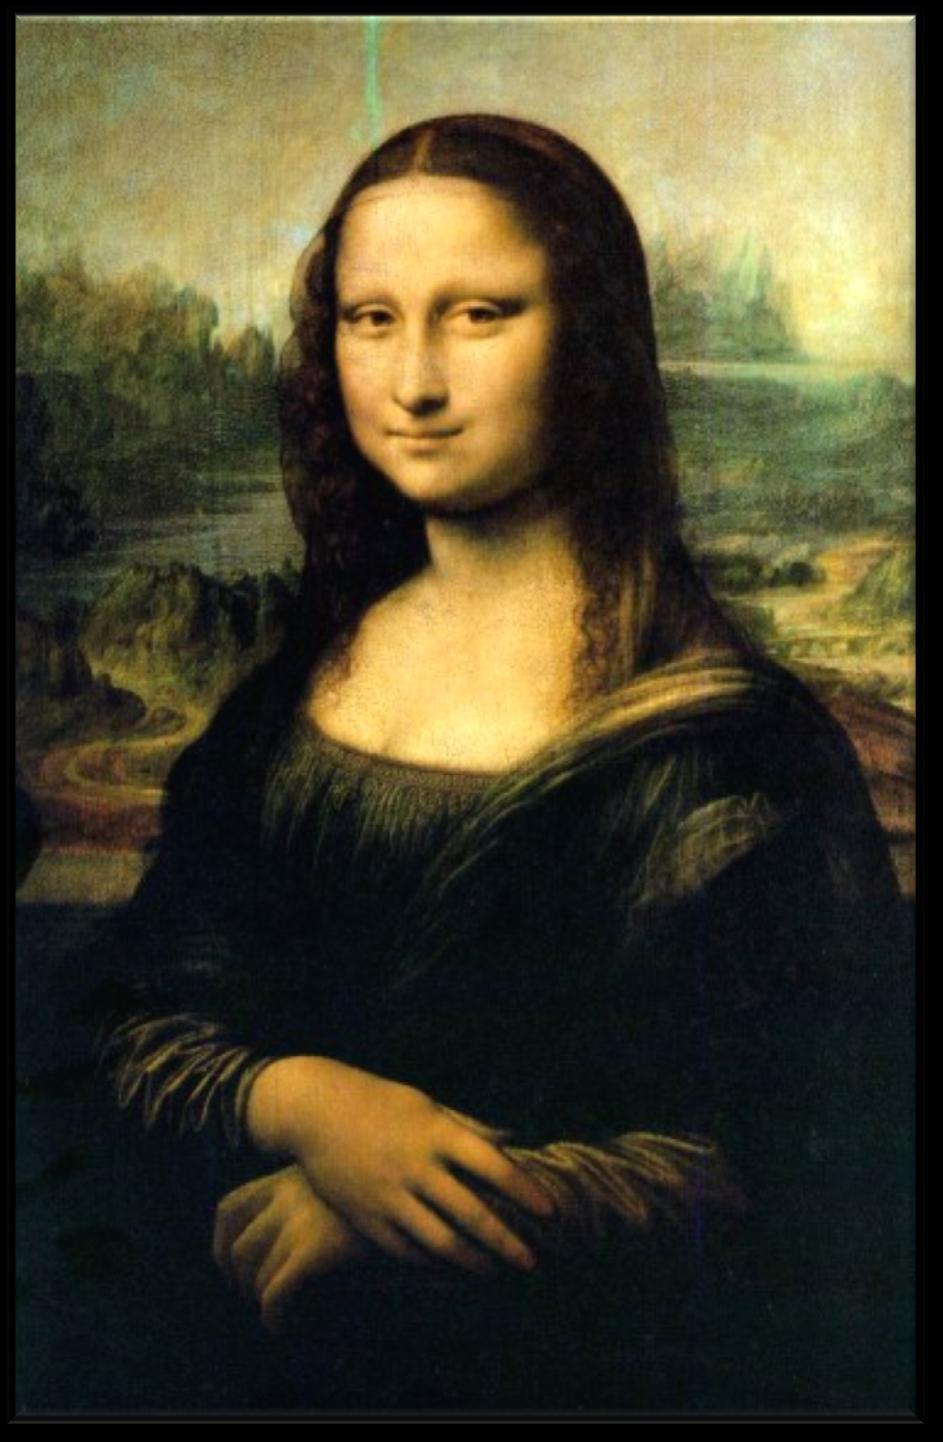 Leonardo Da Vinci (DUC-VIN-CHEE) Mona Lisa 1503 Leonardo s most famous painting the Mona Lisa.